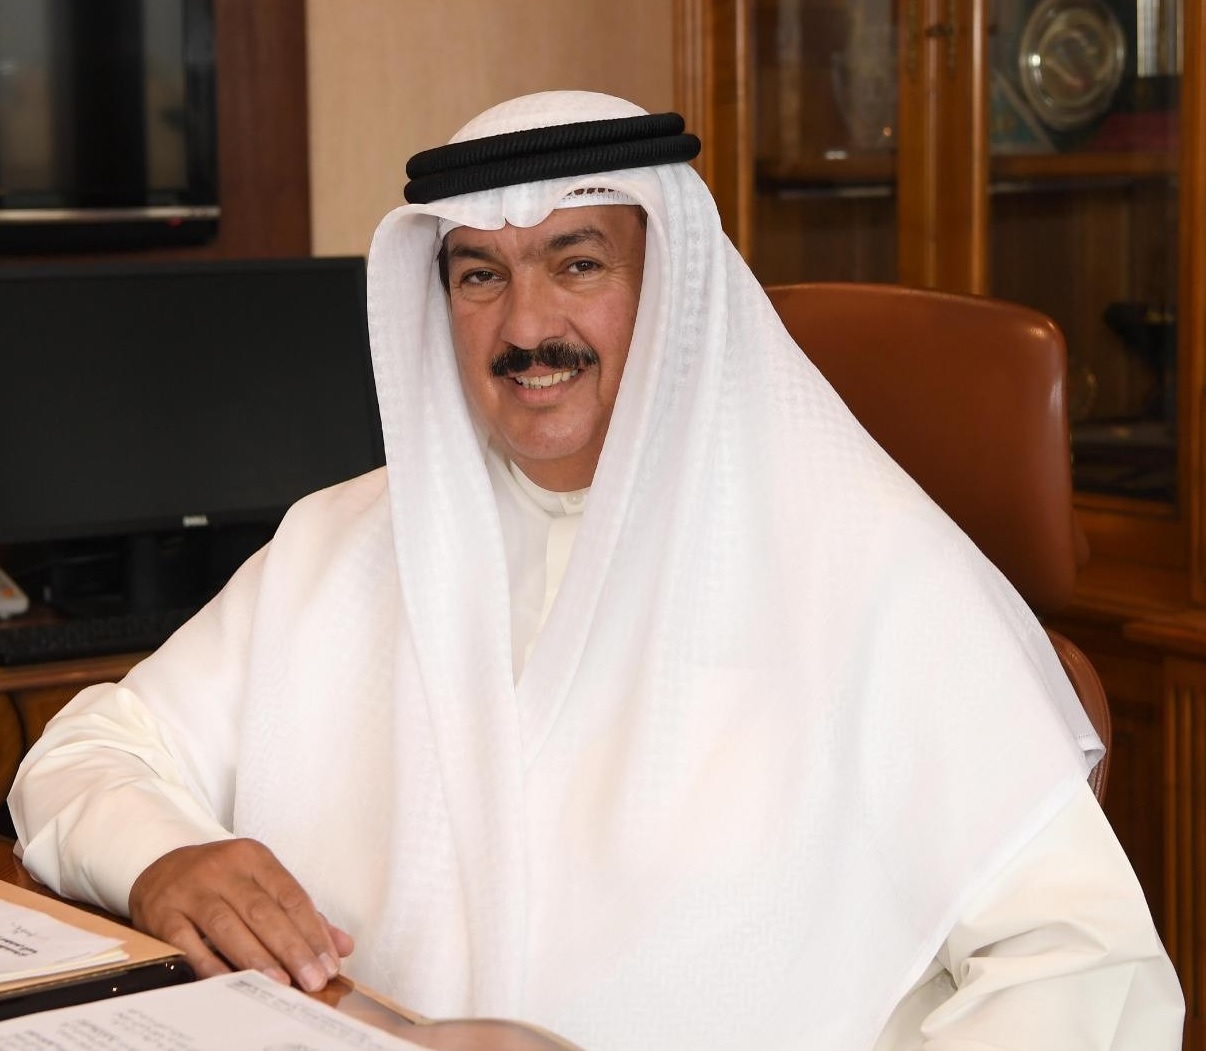 Minister of Education Dr. Ali Al-Mudhaf